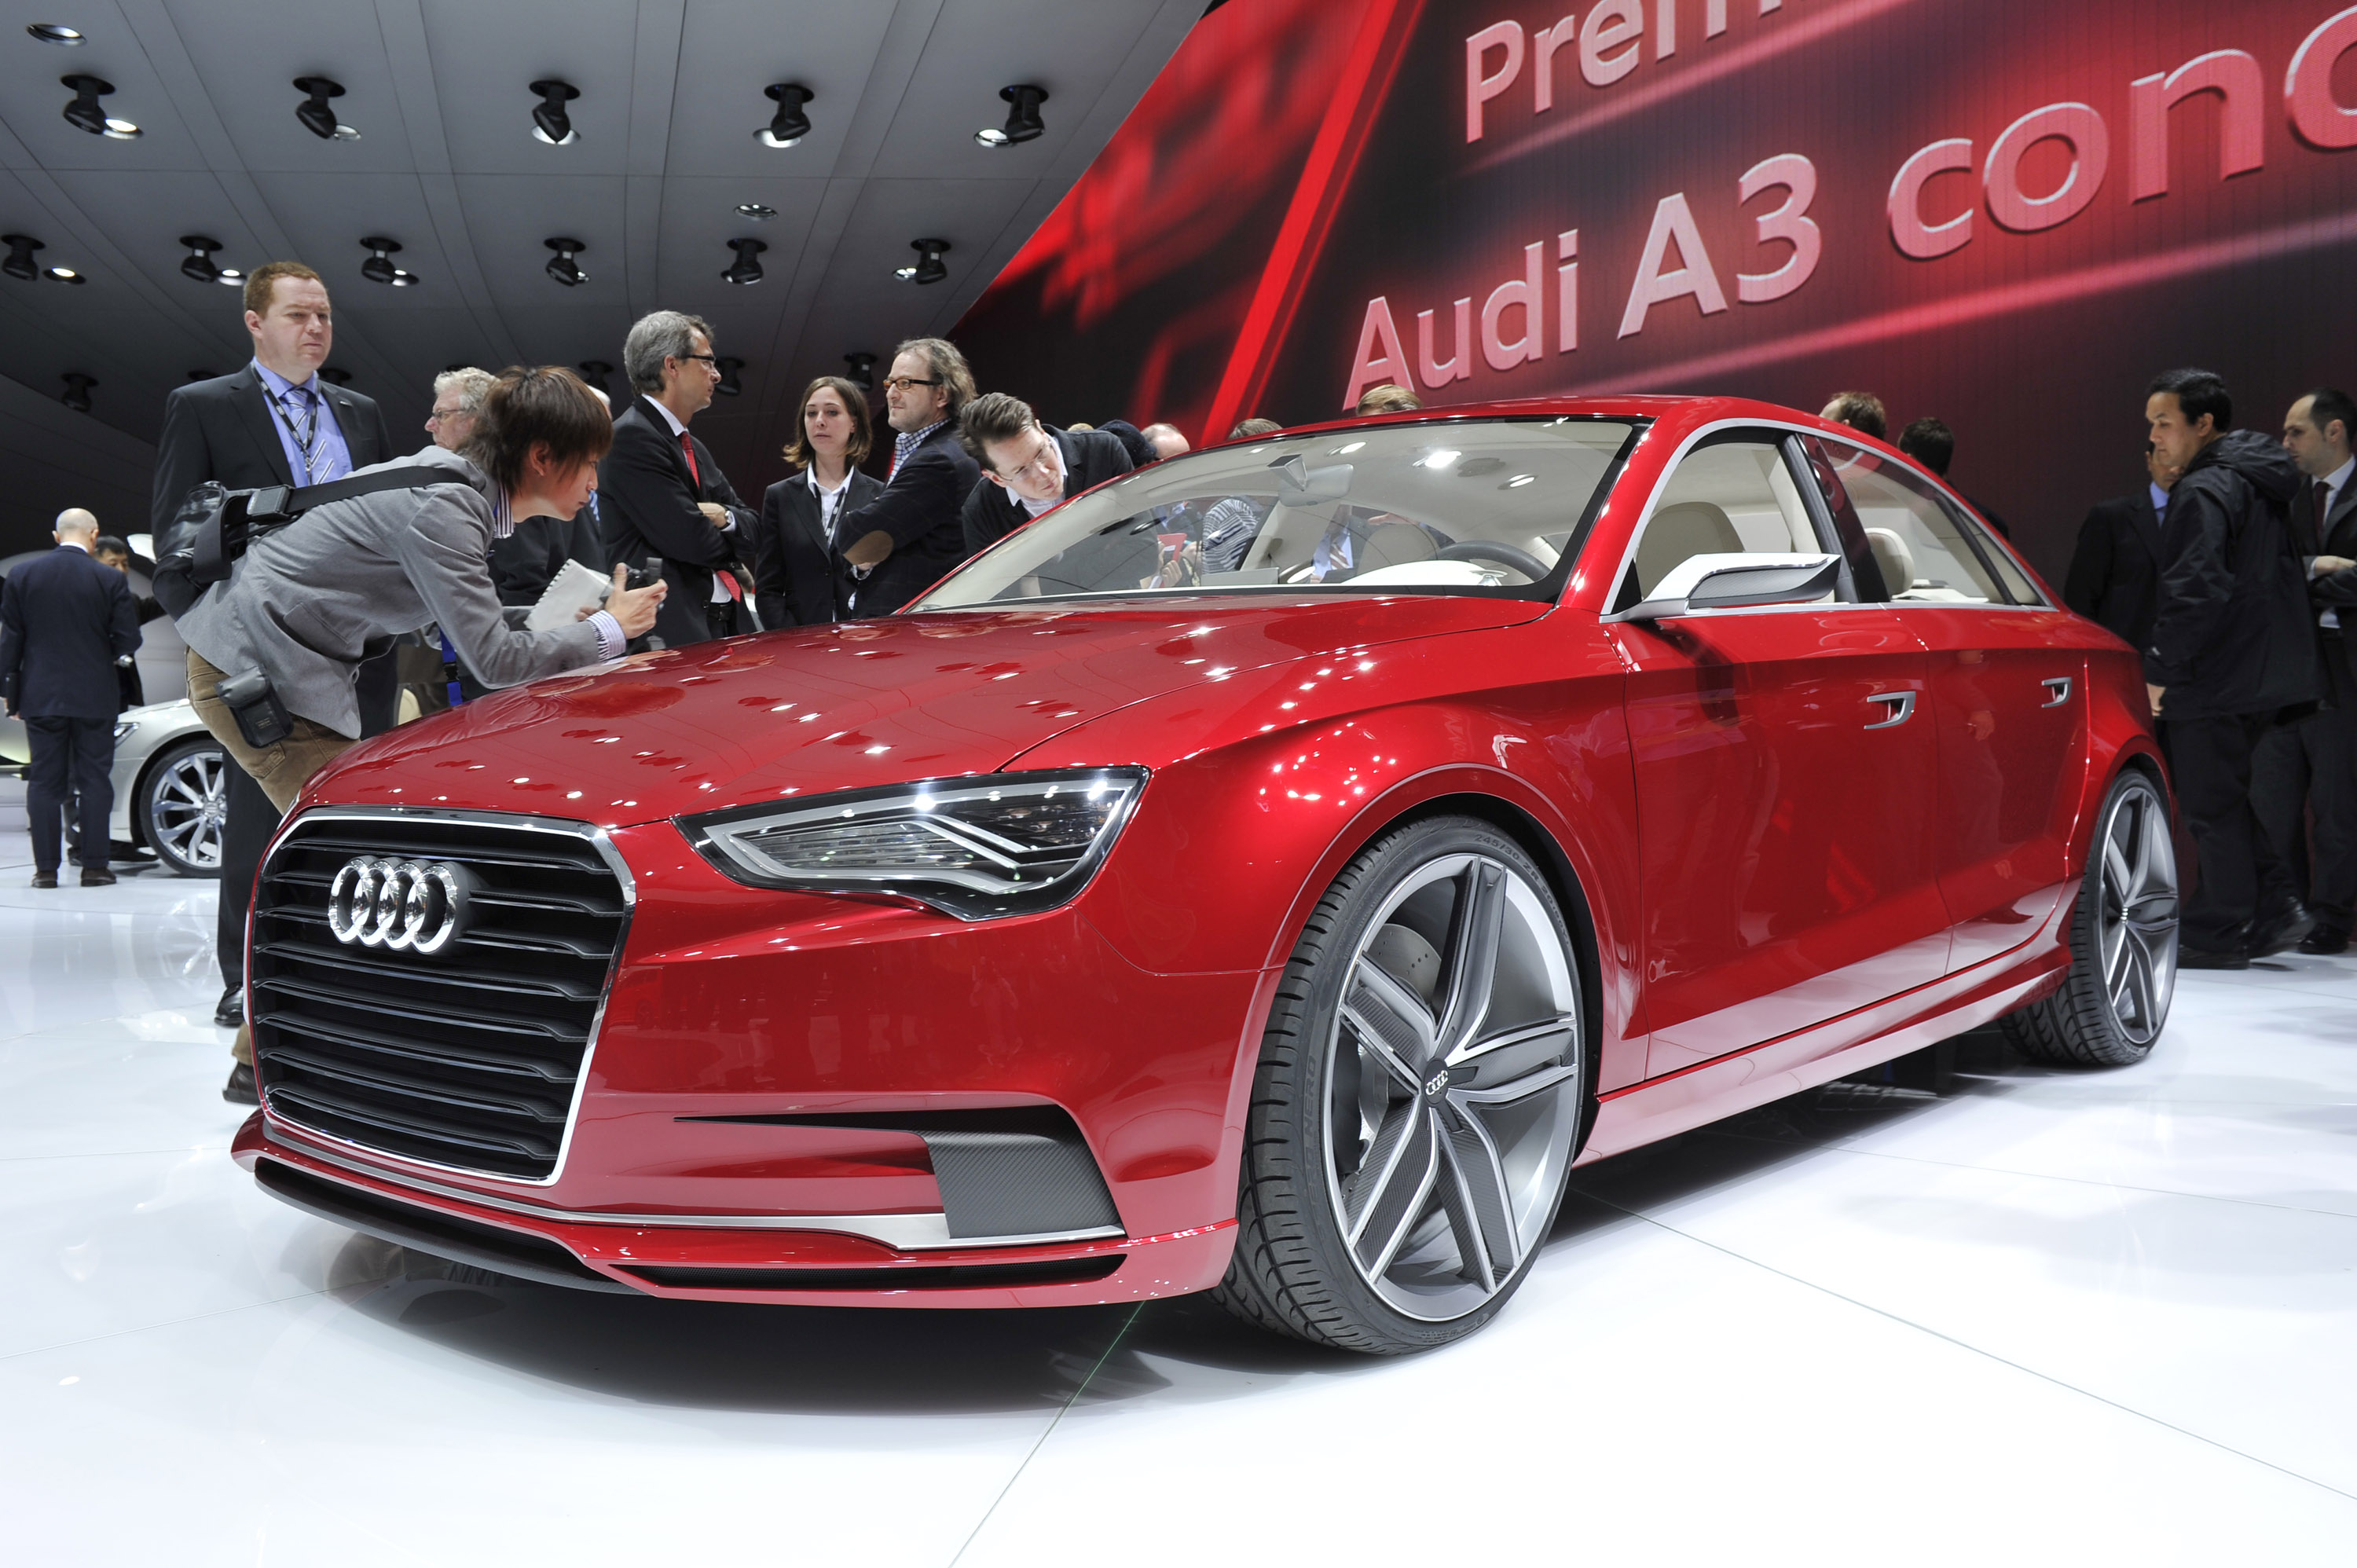 Audi A3 Concept Geneva